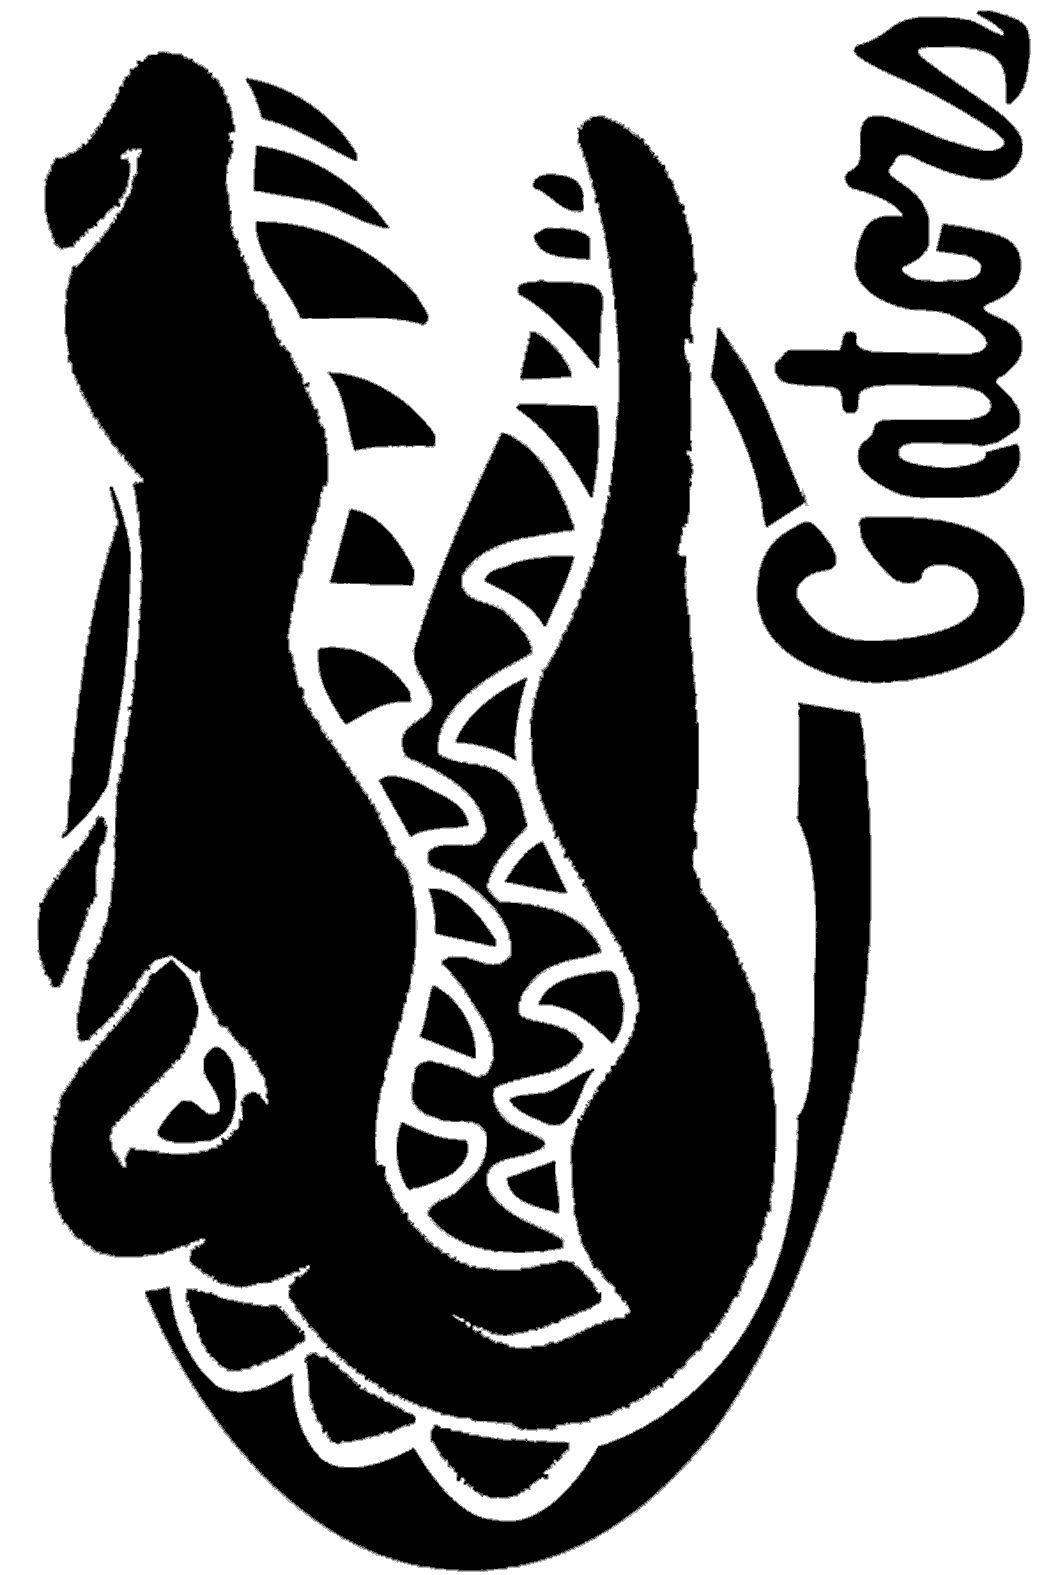 FL Gators Logo - Pattern to make your pumpkin a Florida Gator | Gator-ific Goodies ...